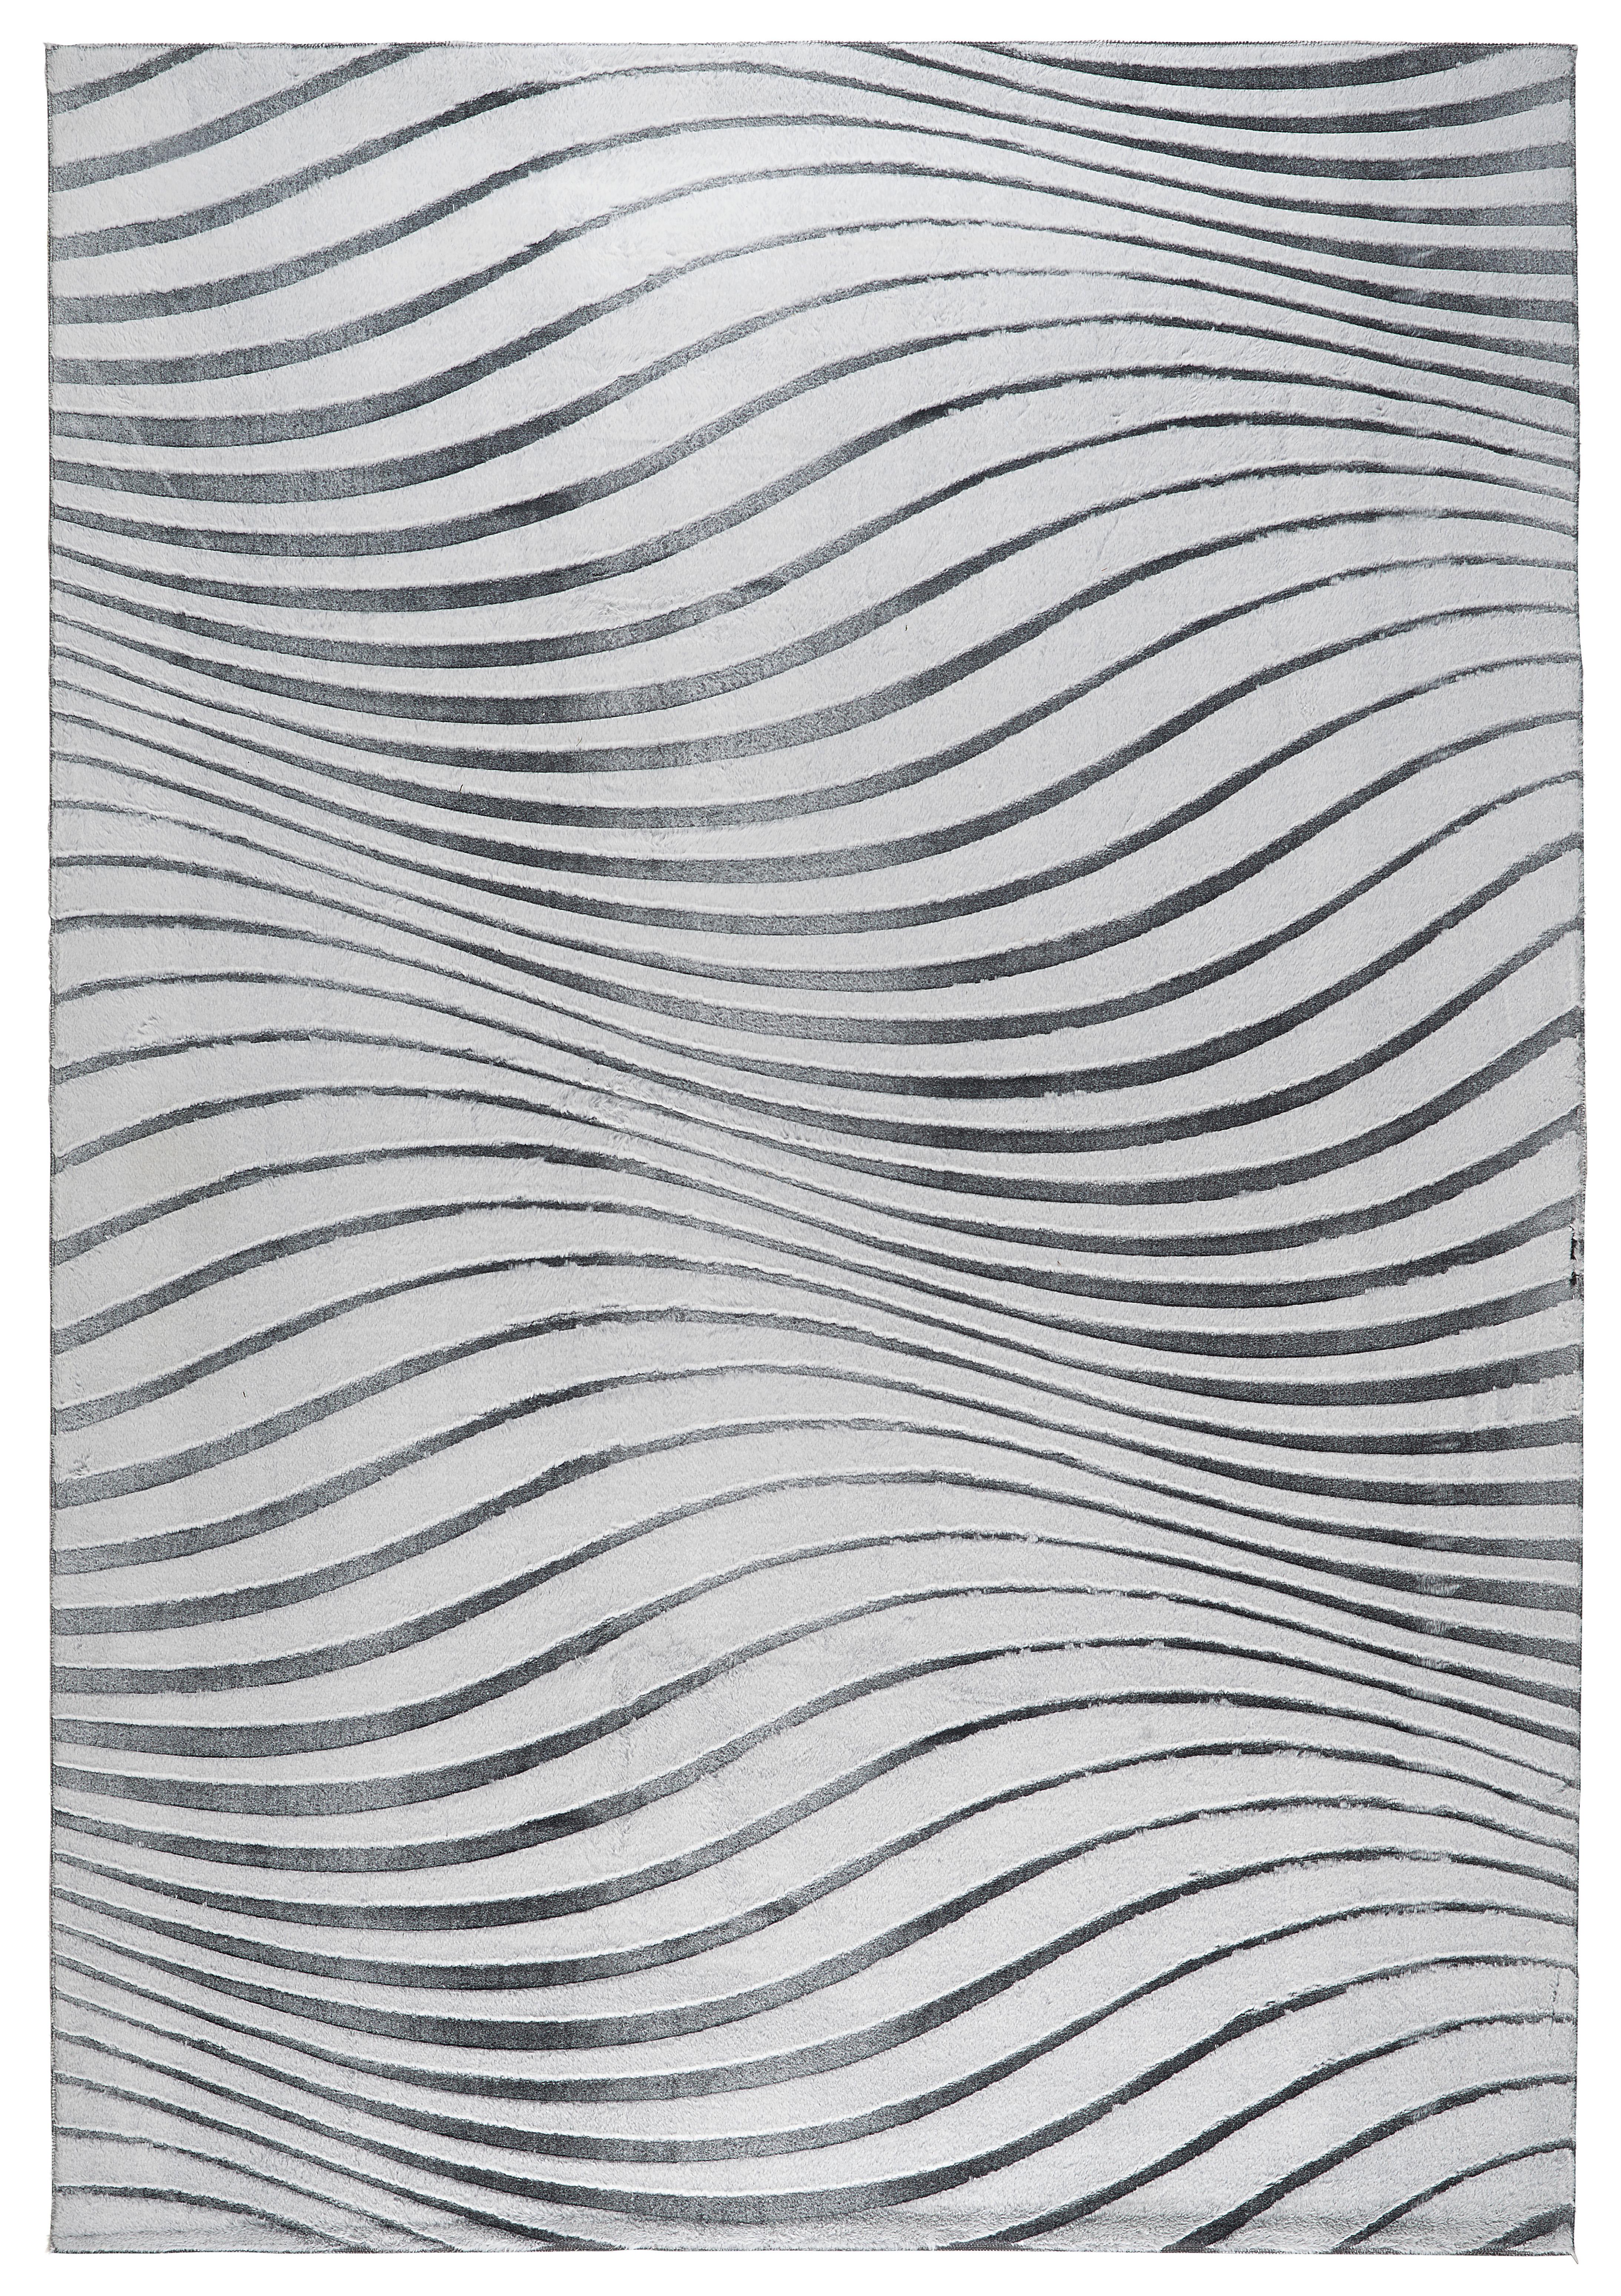 Fellteppich Veronika Grau/Weiß 160x220 cm - Grau, ROMANTIK / LANDHAUS, Textil (160/220cm) - James Wood